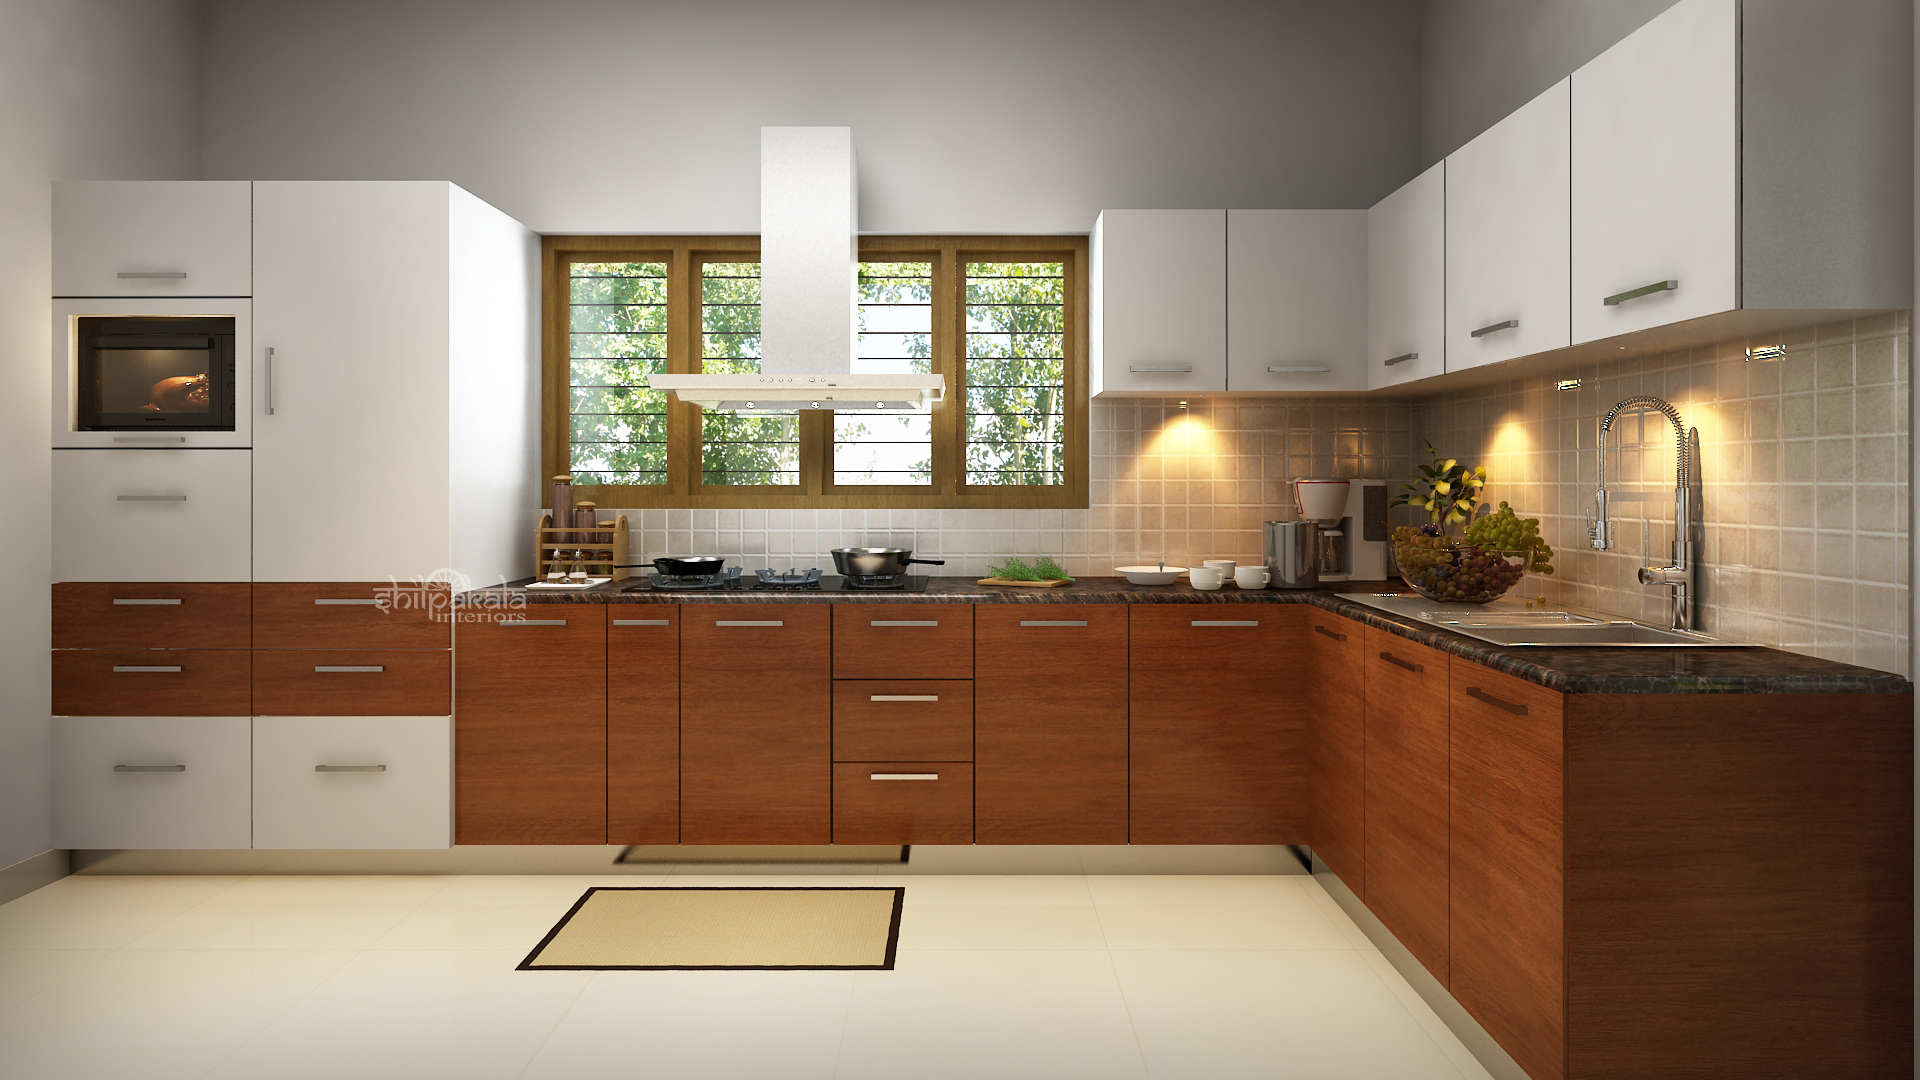 interior designing kitchen image